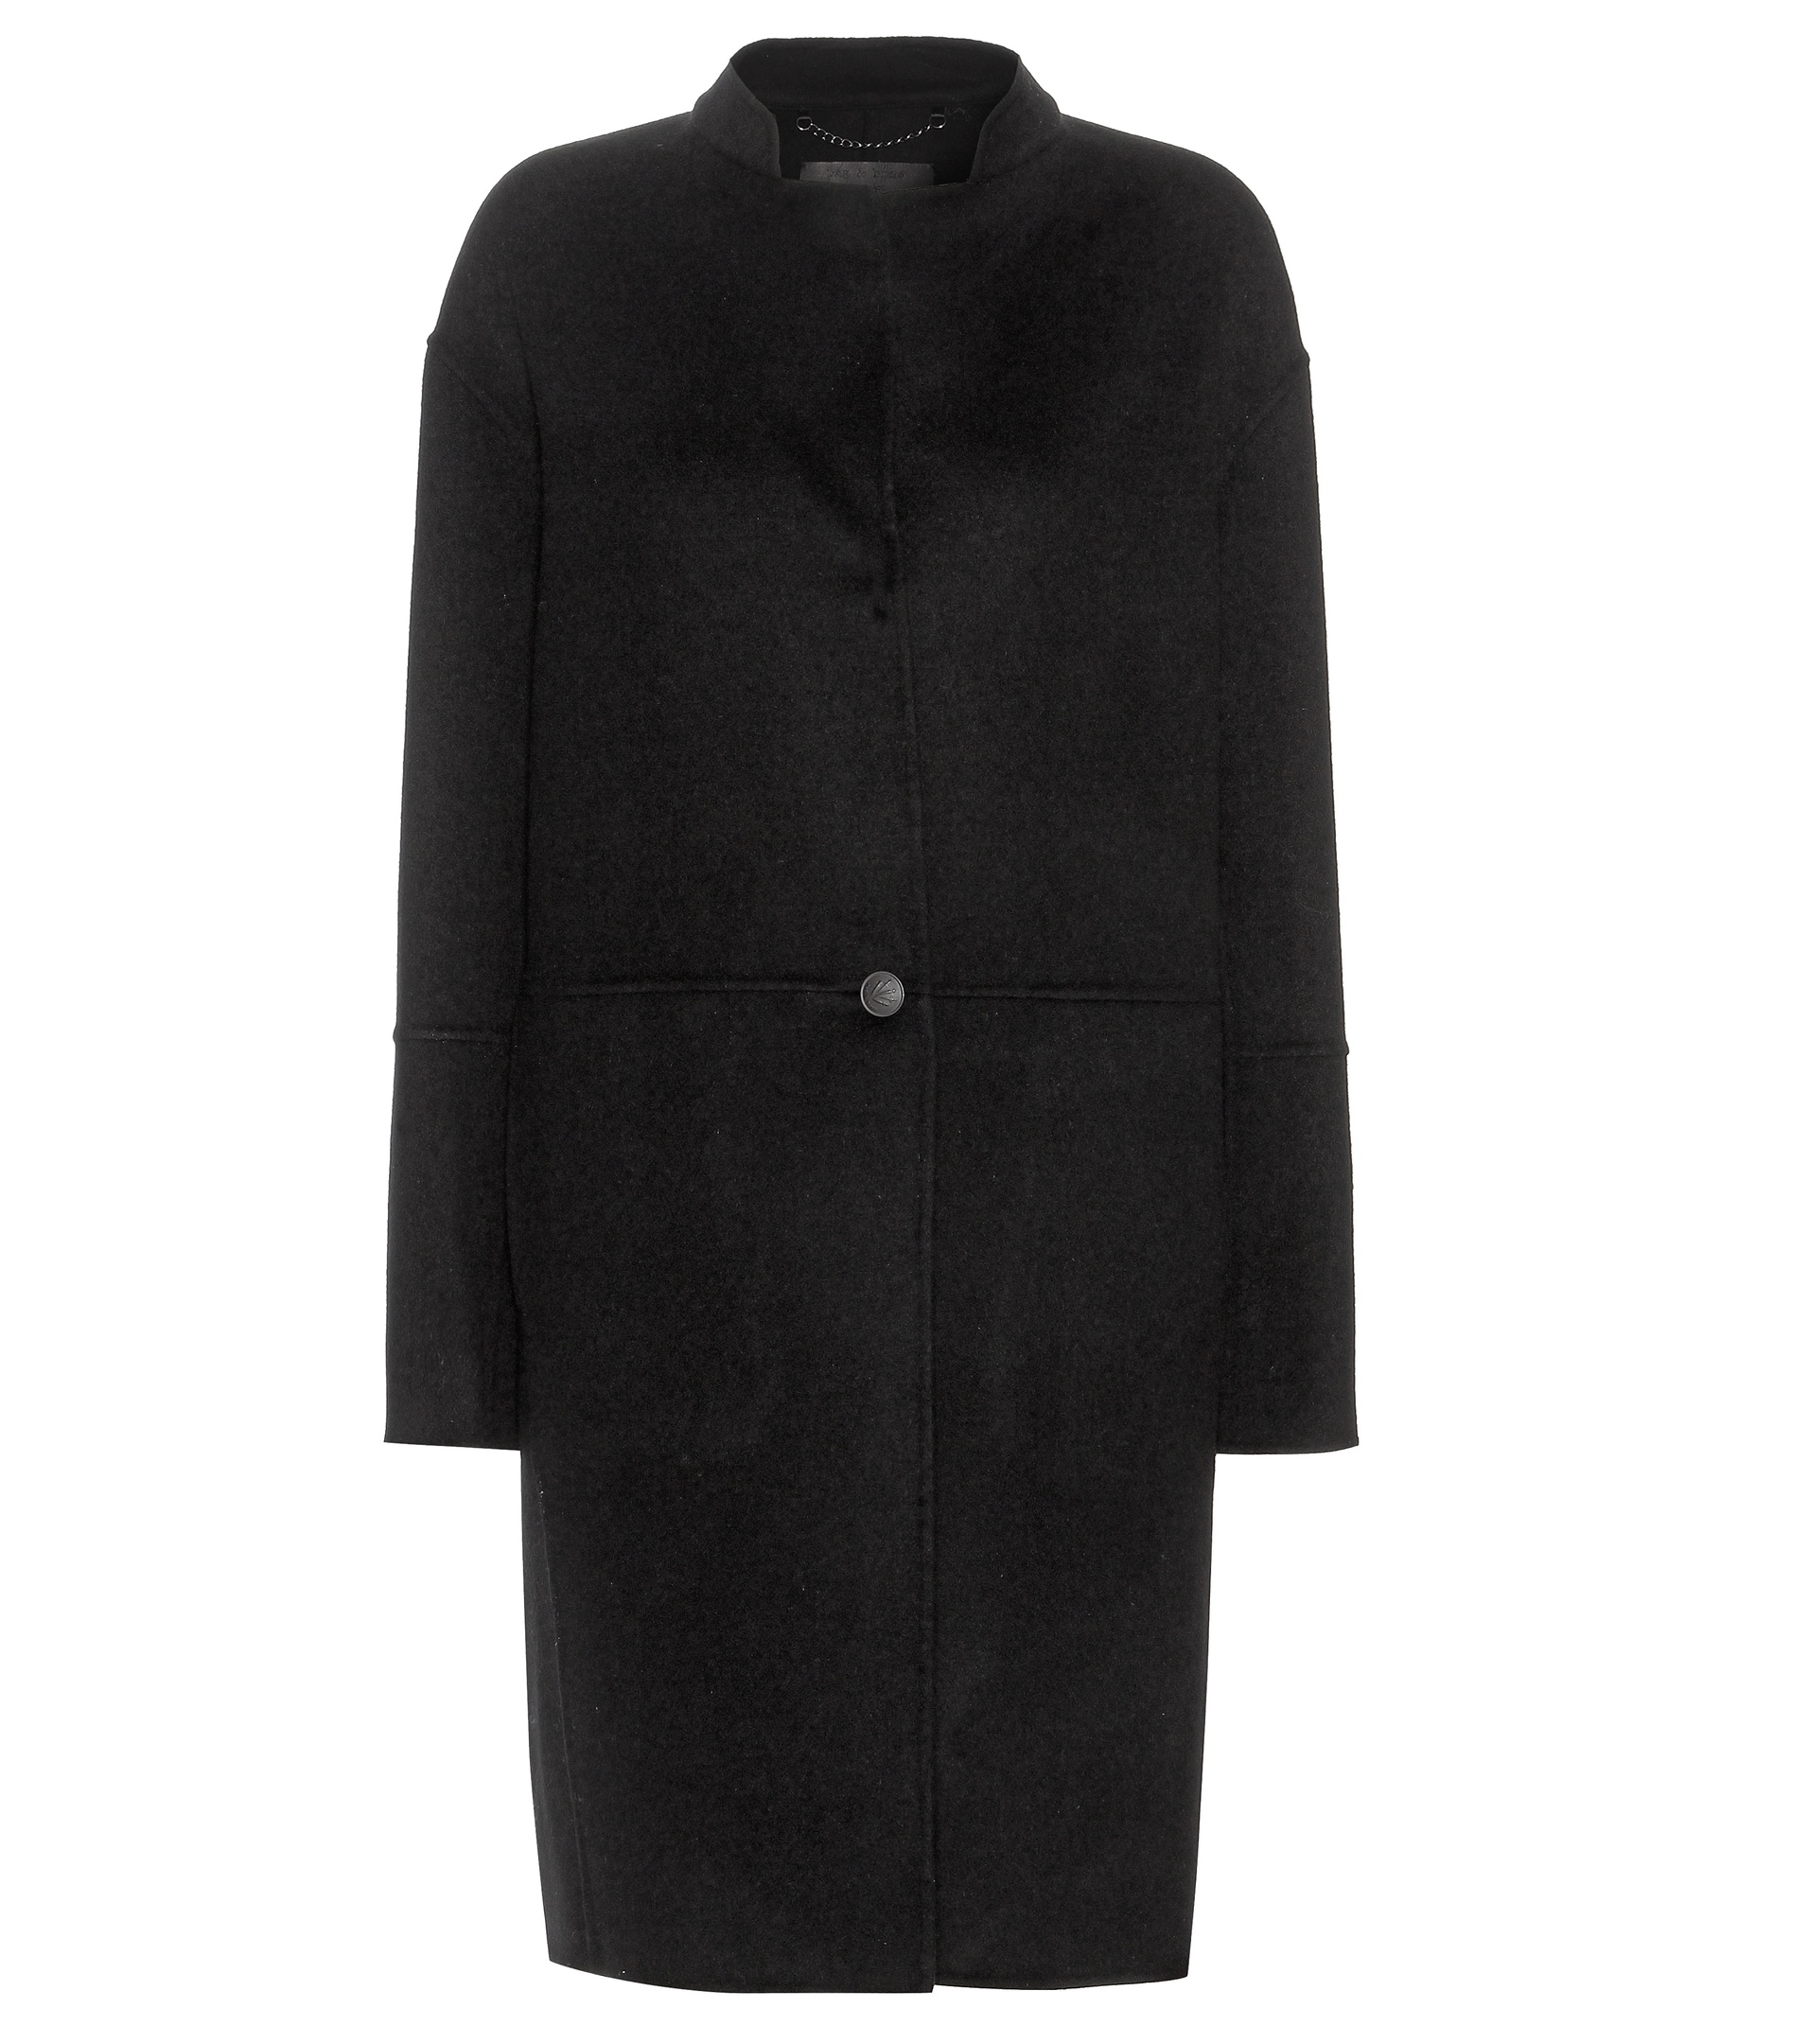 Rag & Bone Marina Wool Coat in Black - Lyst